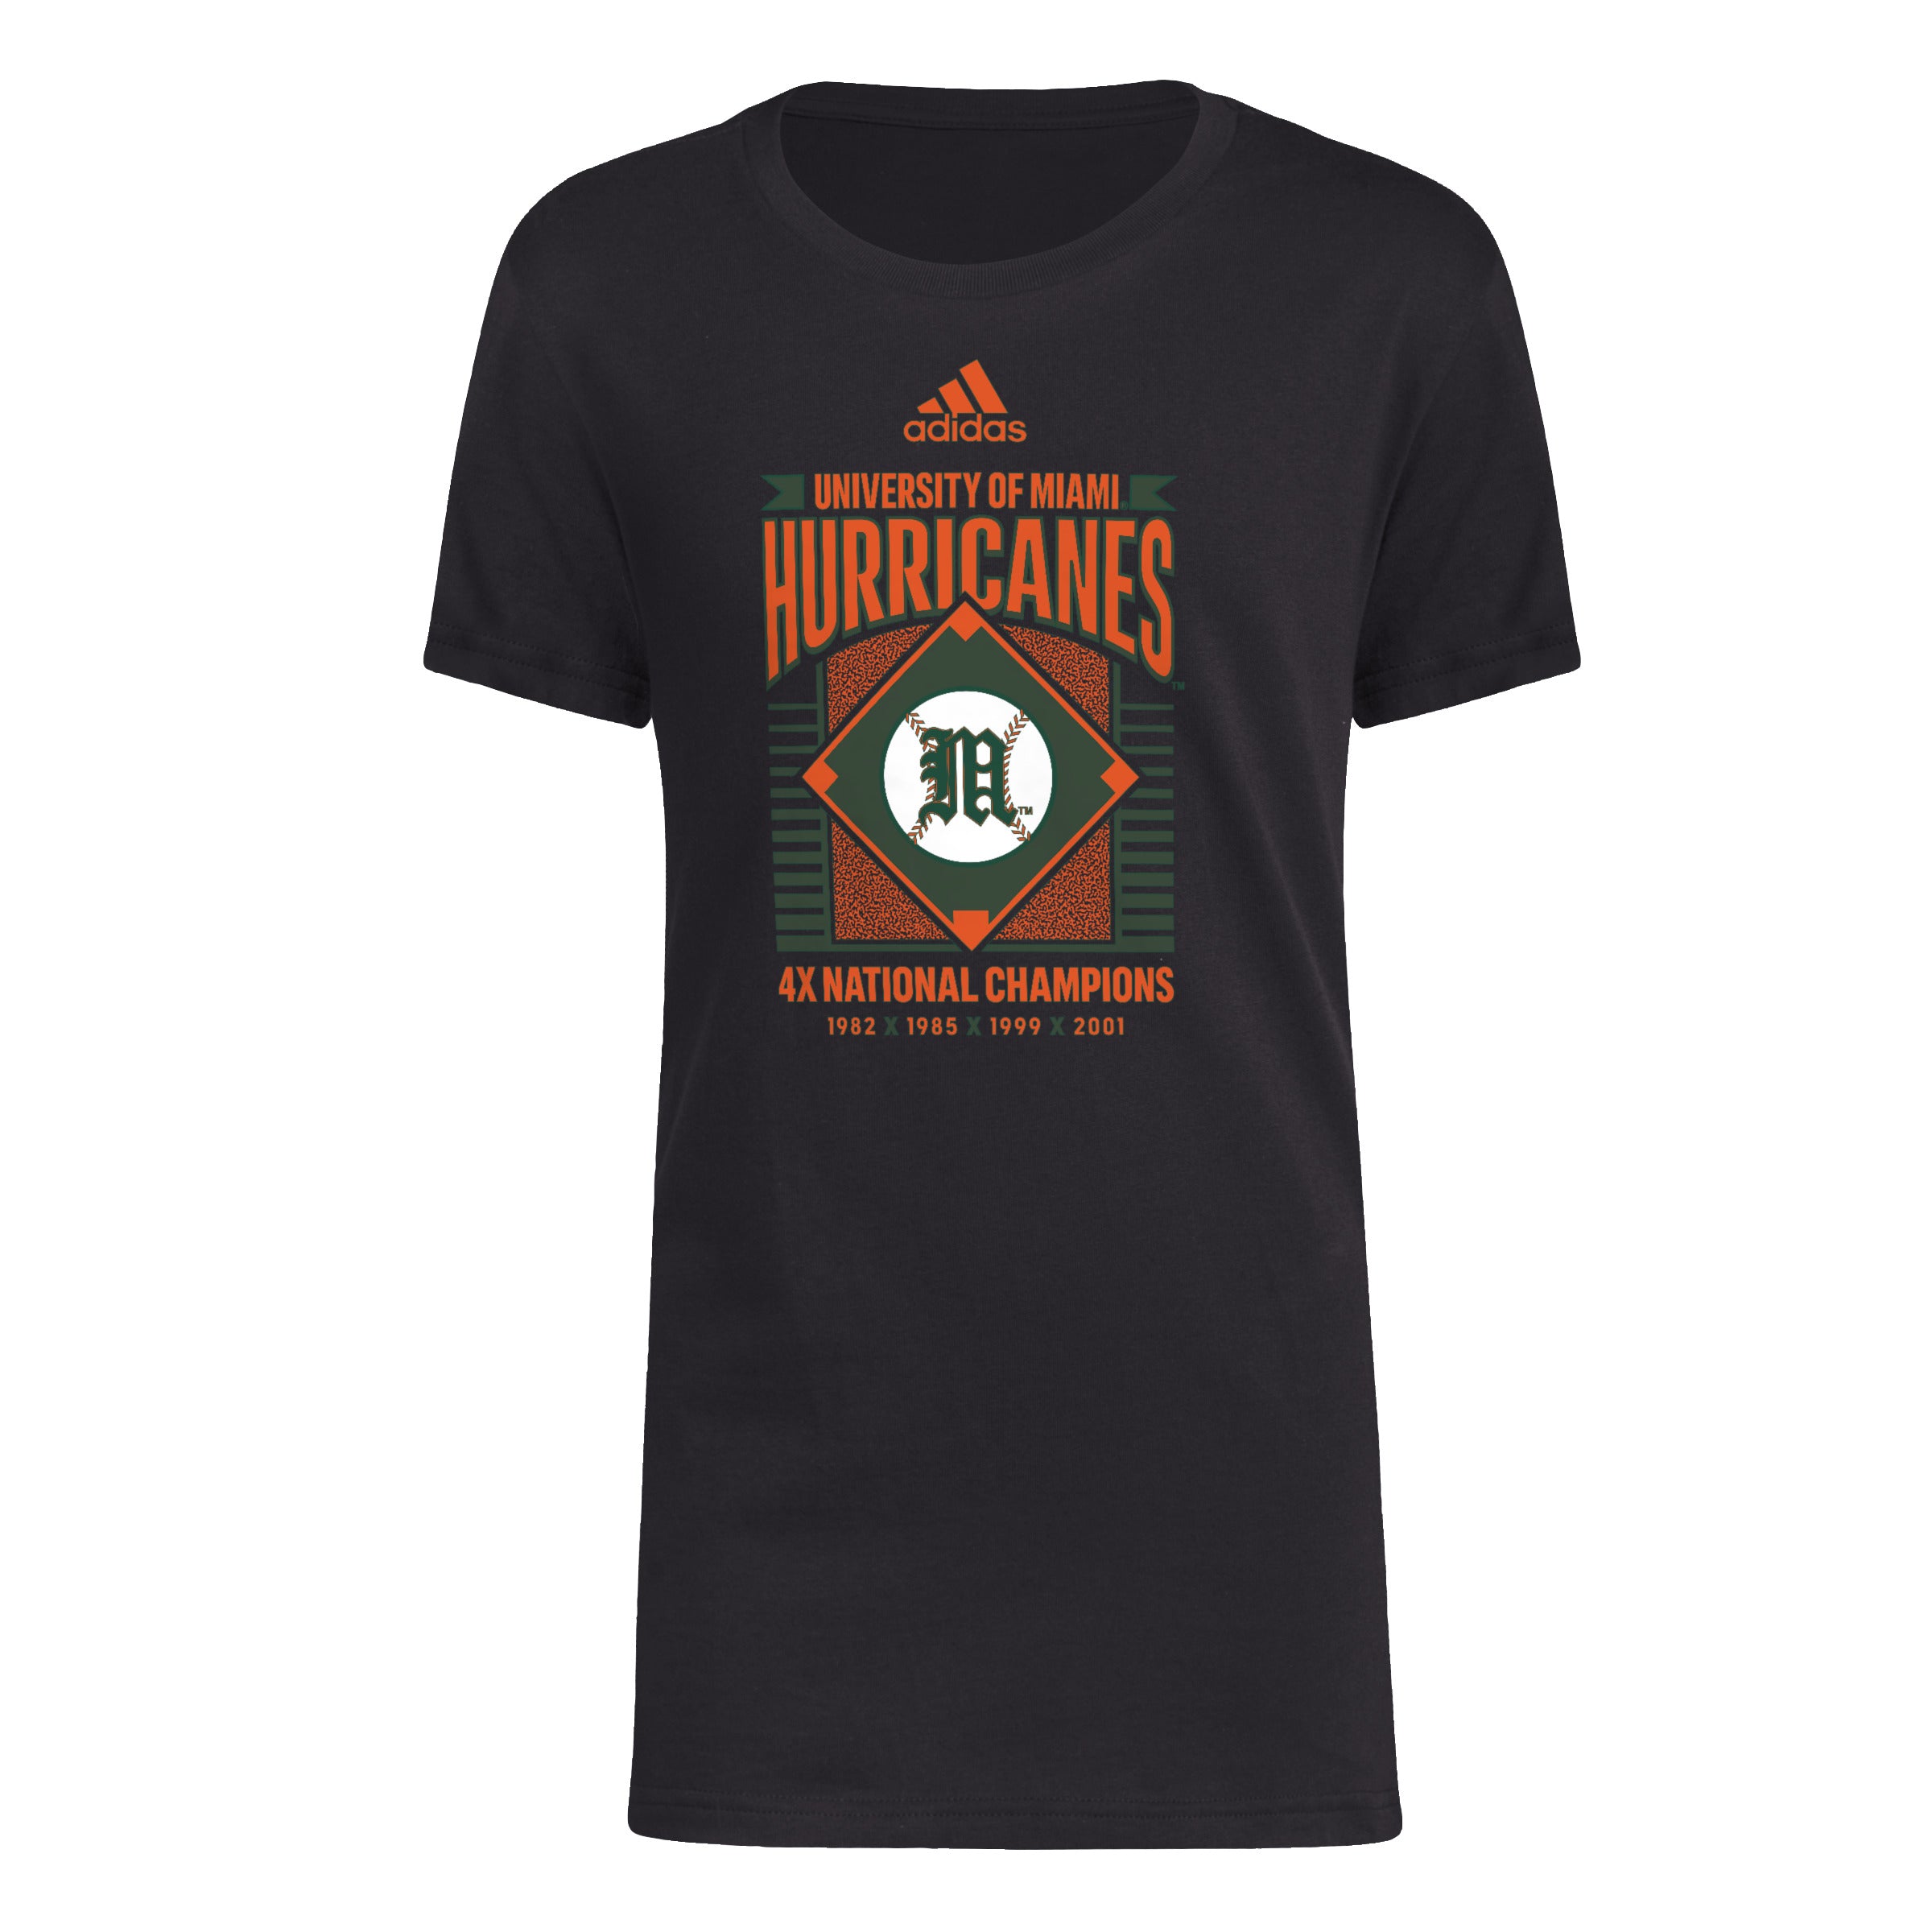 Miami Hurricanes adidas Youth Baseball Champs Fresh T-Shirt - Black